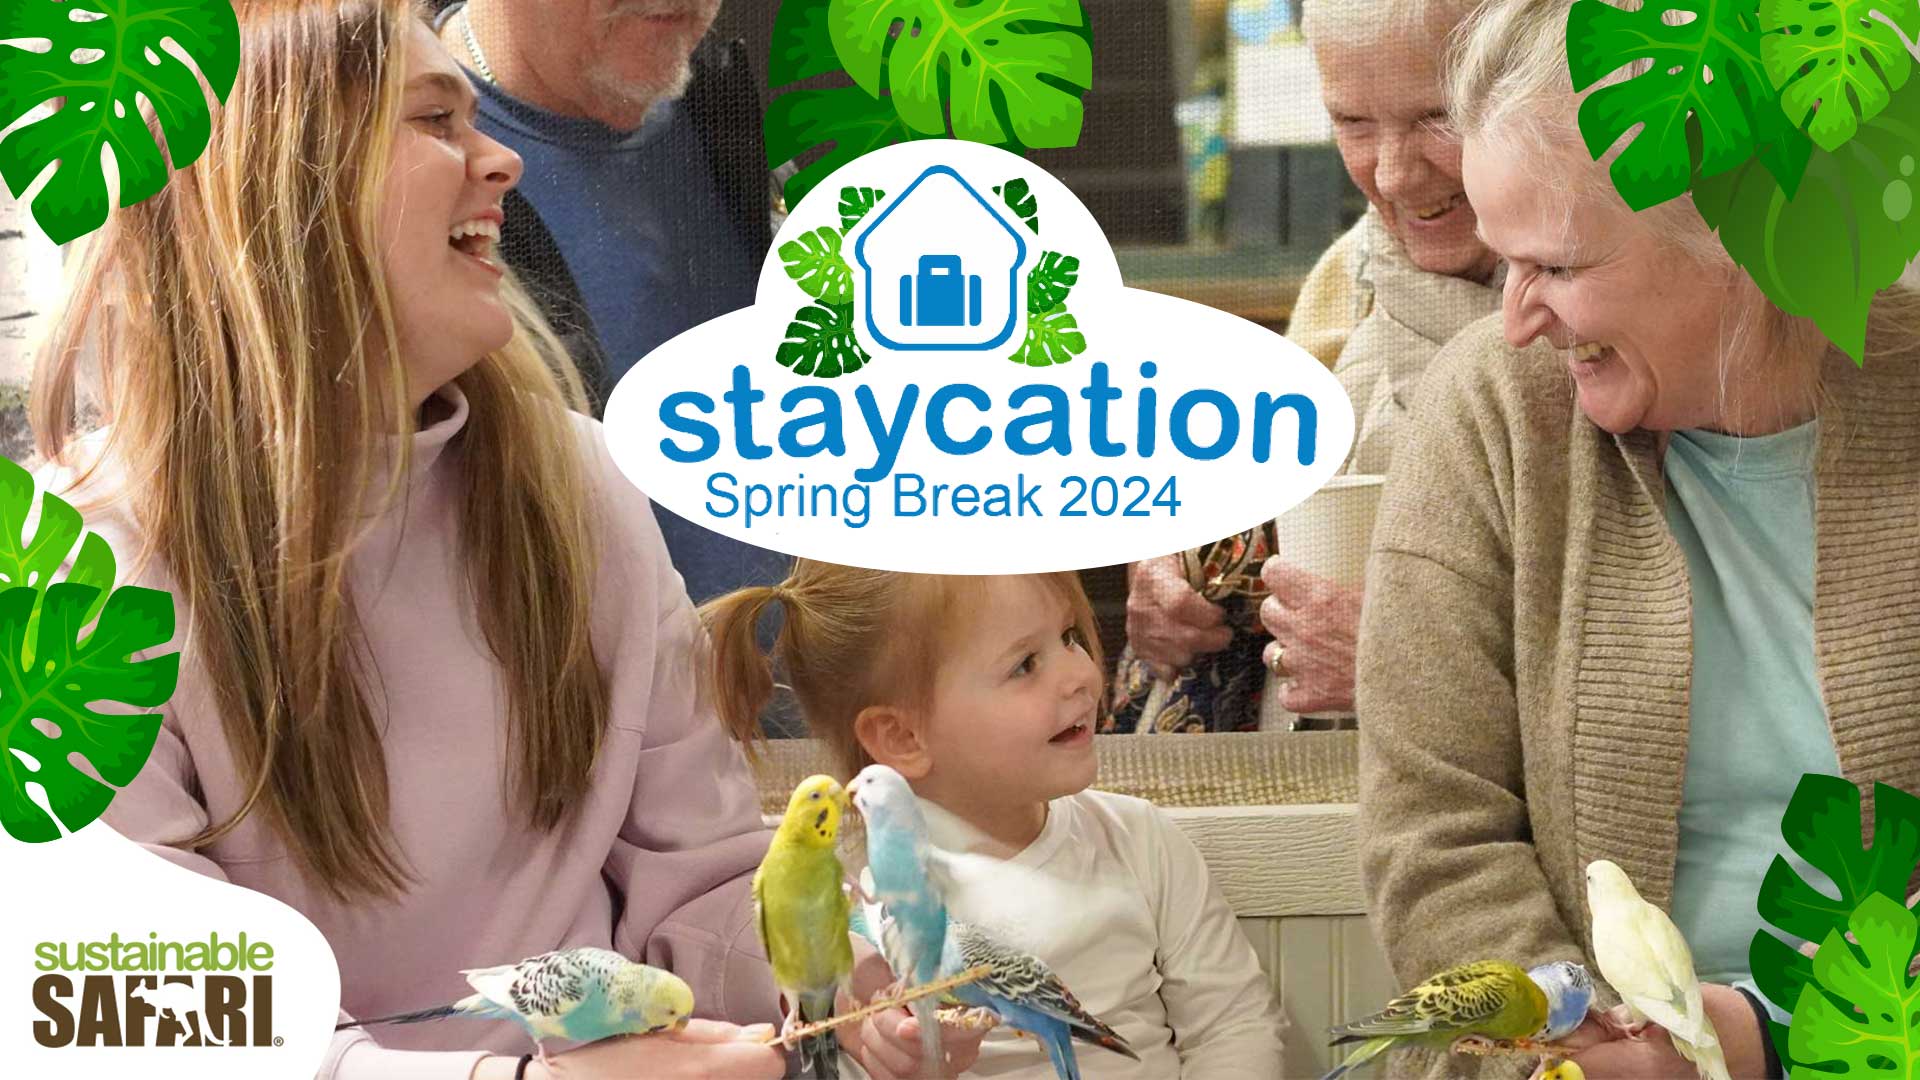 Staycation Spring Break 2024 at Sustainable Safari